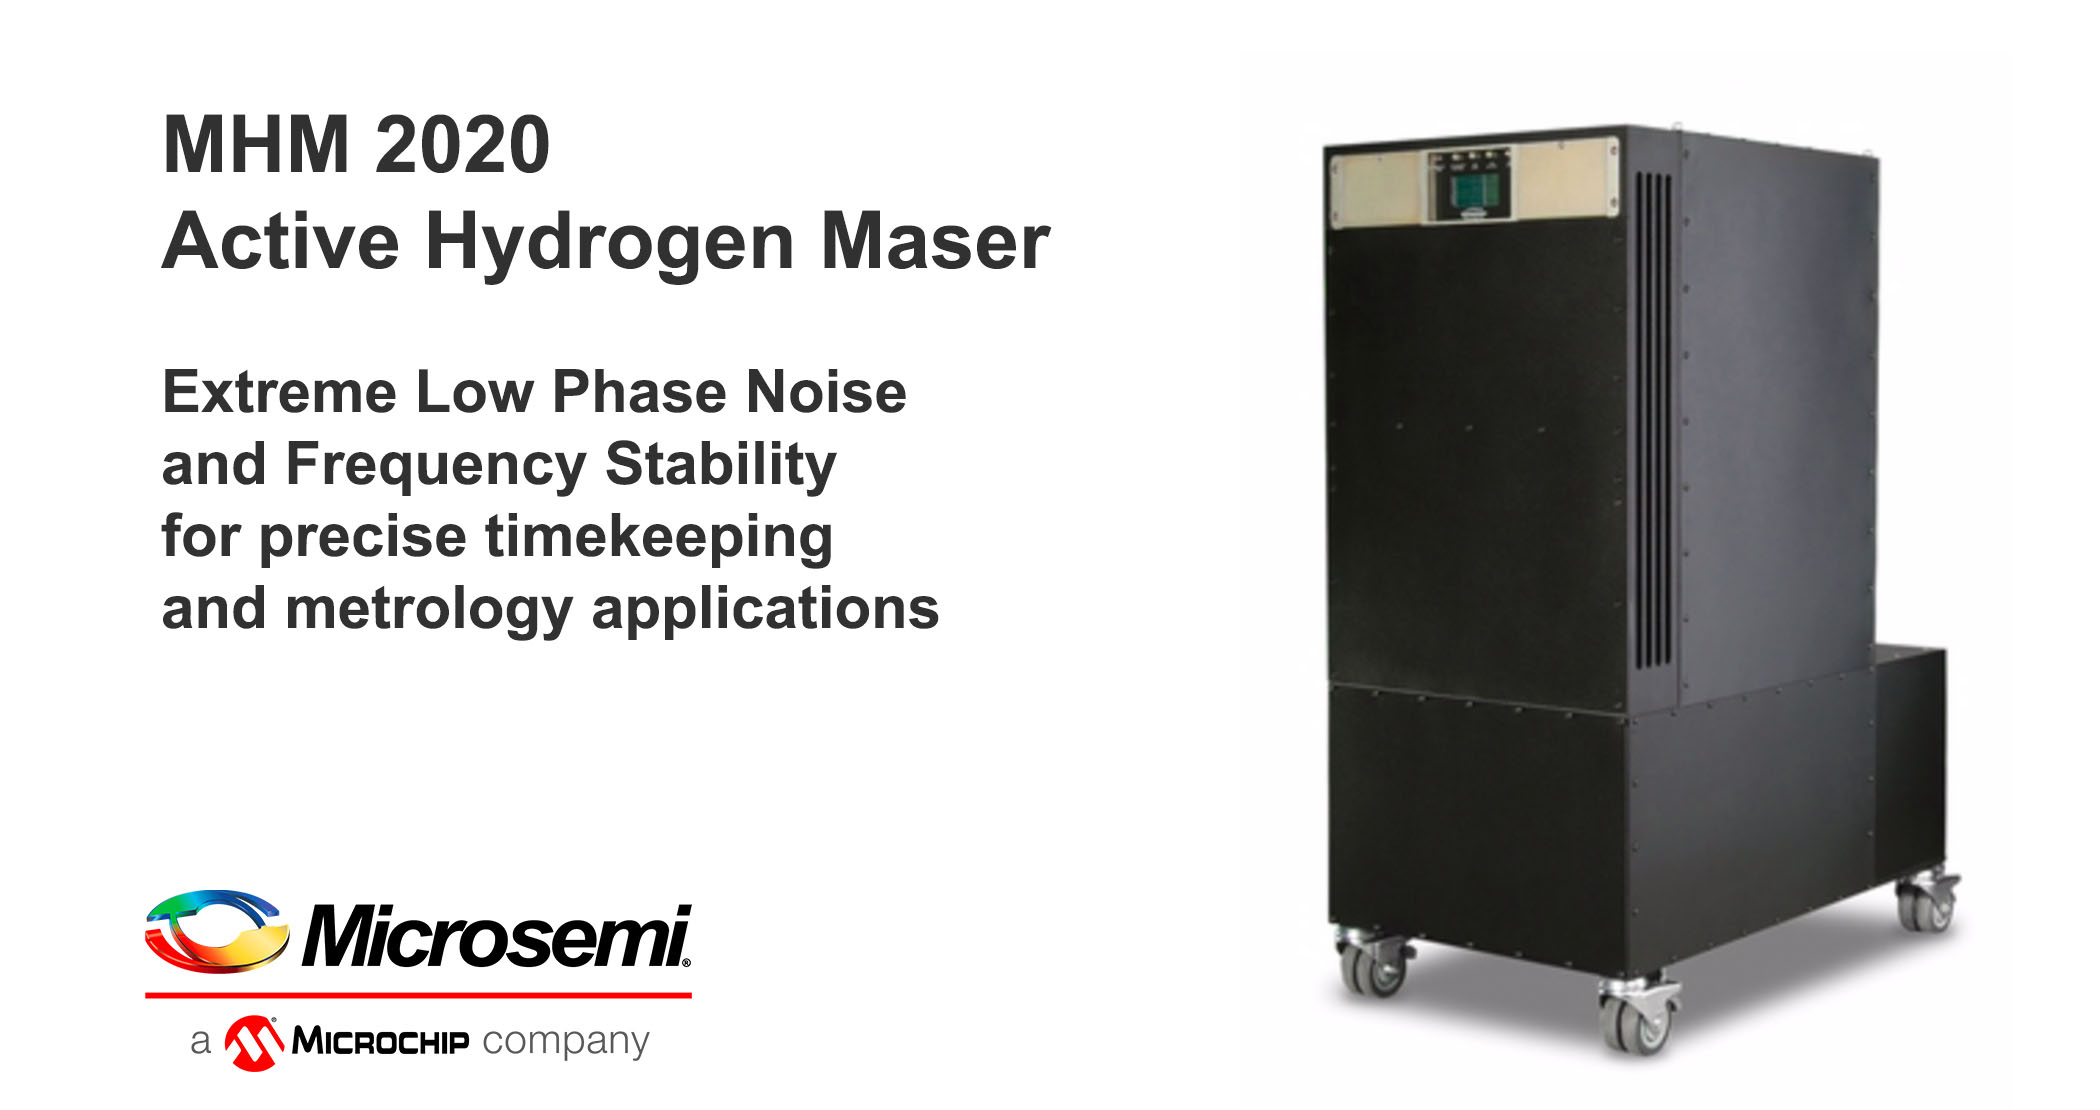 MHM 2020 Active Hydrogen Maser